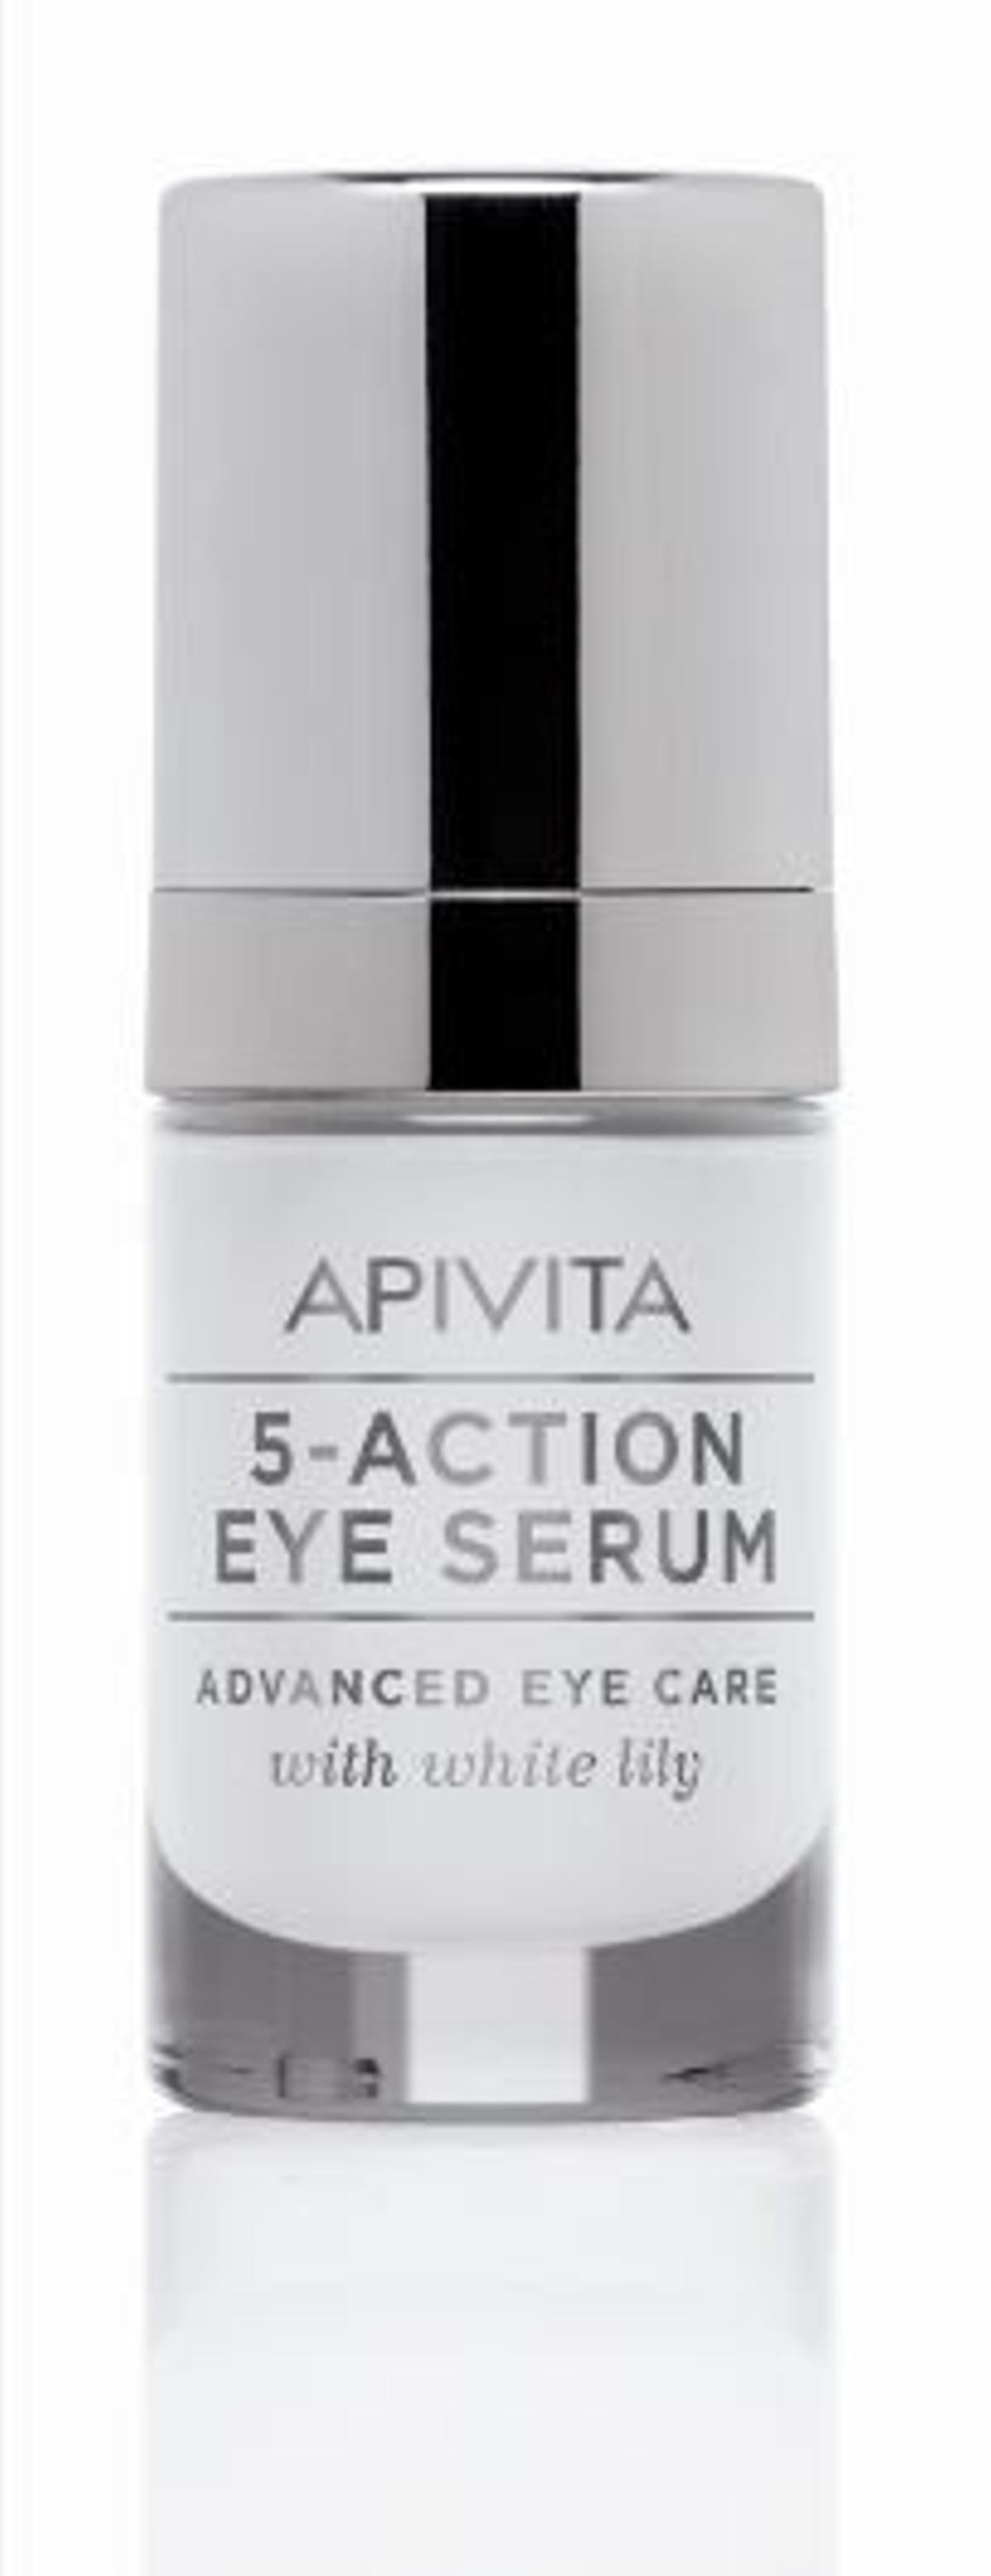 5 Action Eye Serum, de Apivita